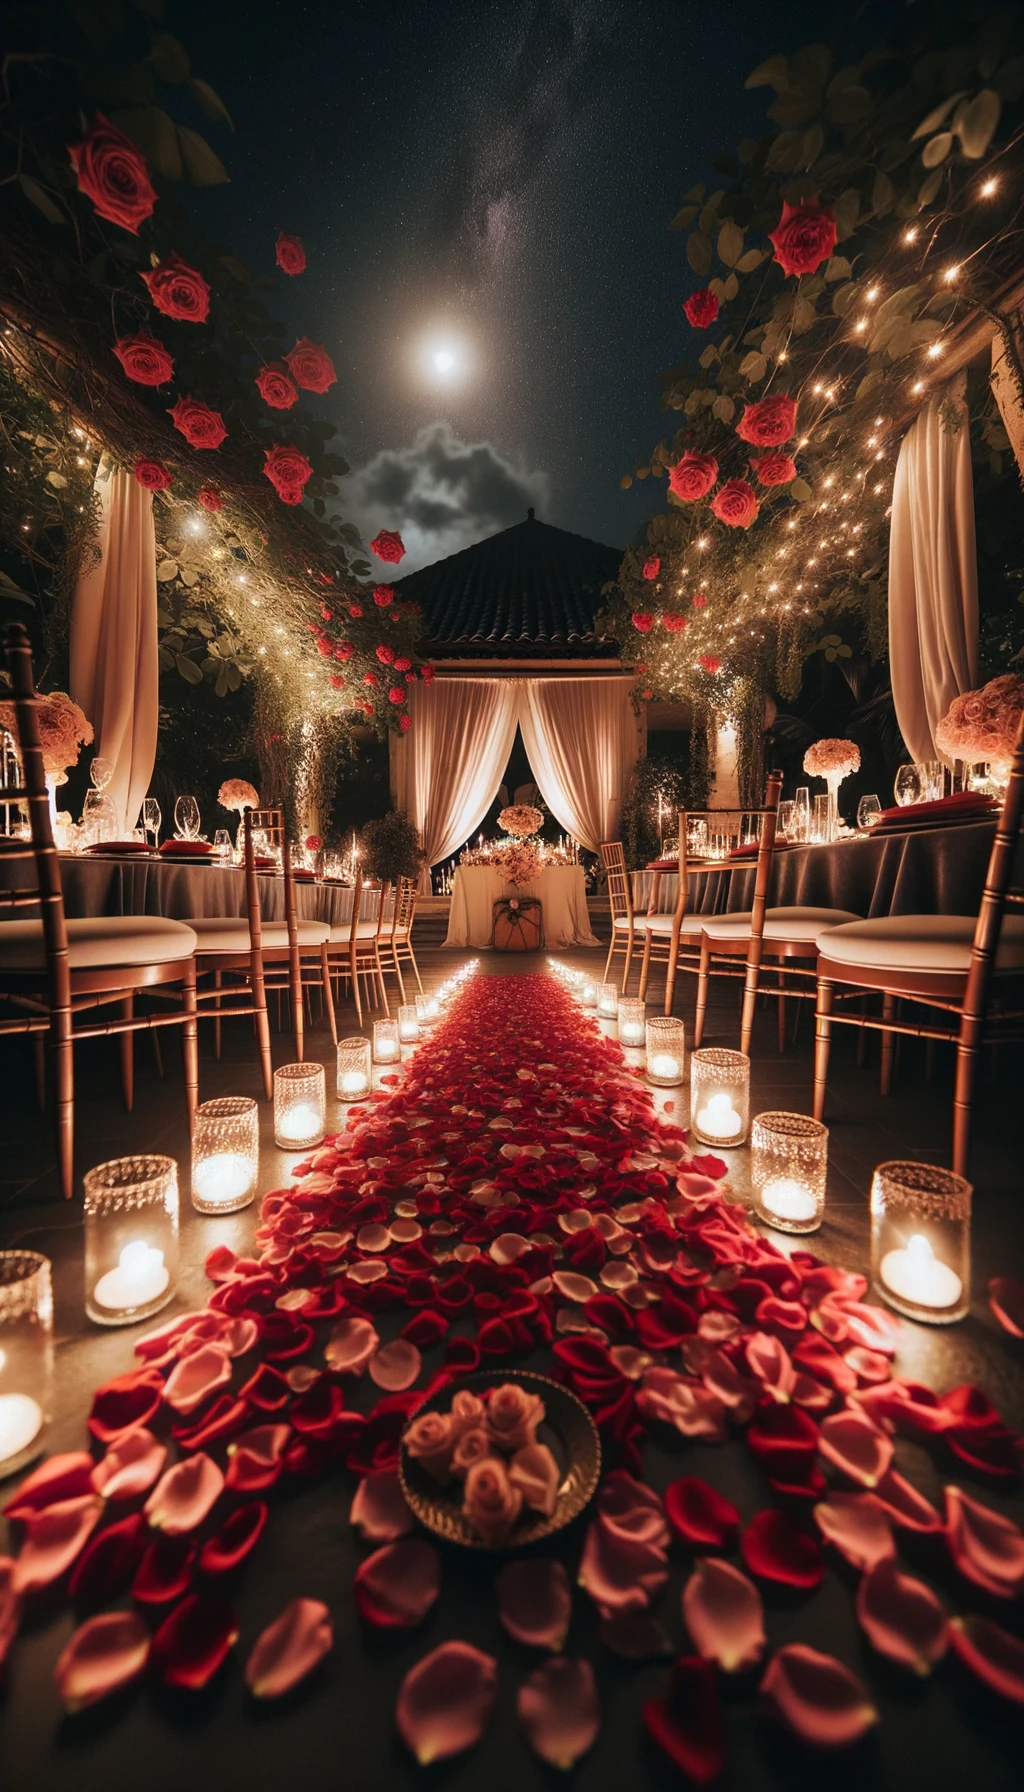 wedding, love image for wallpaper